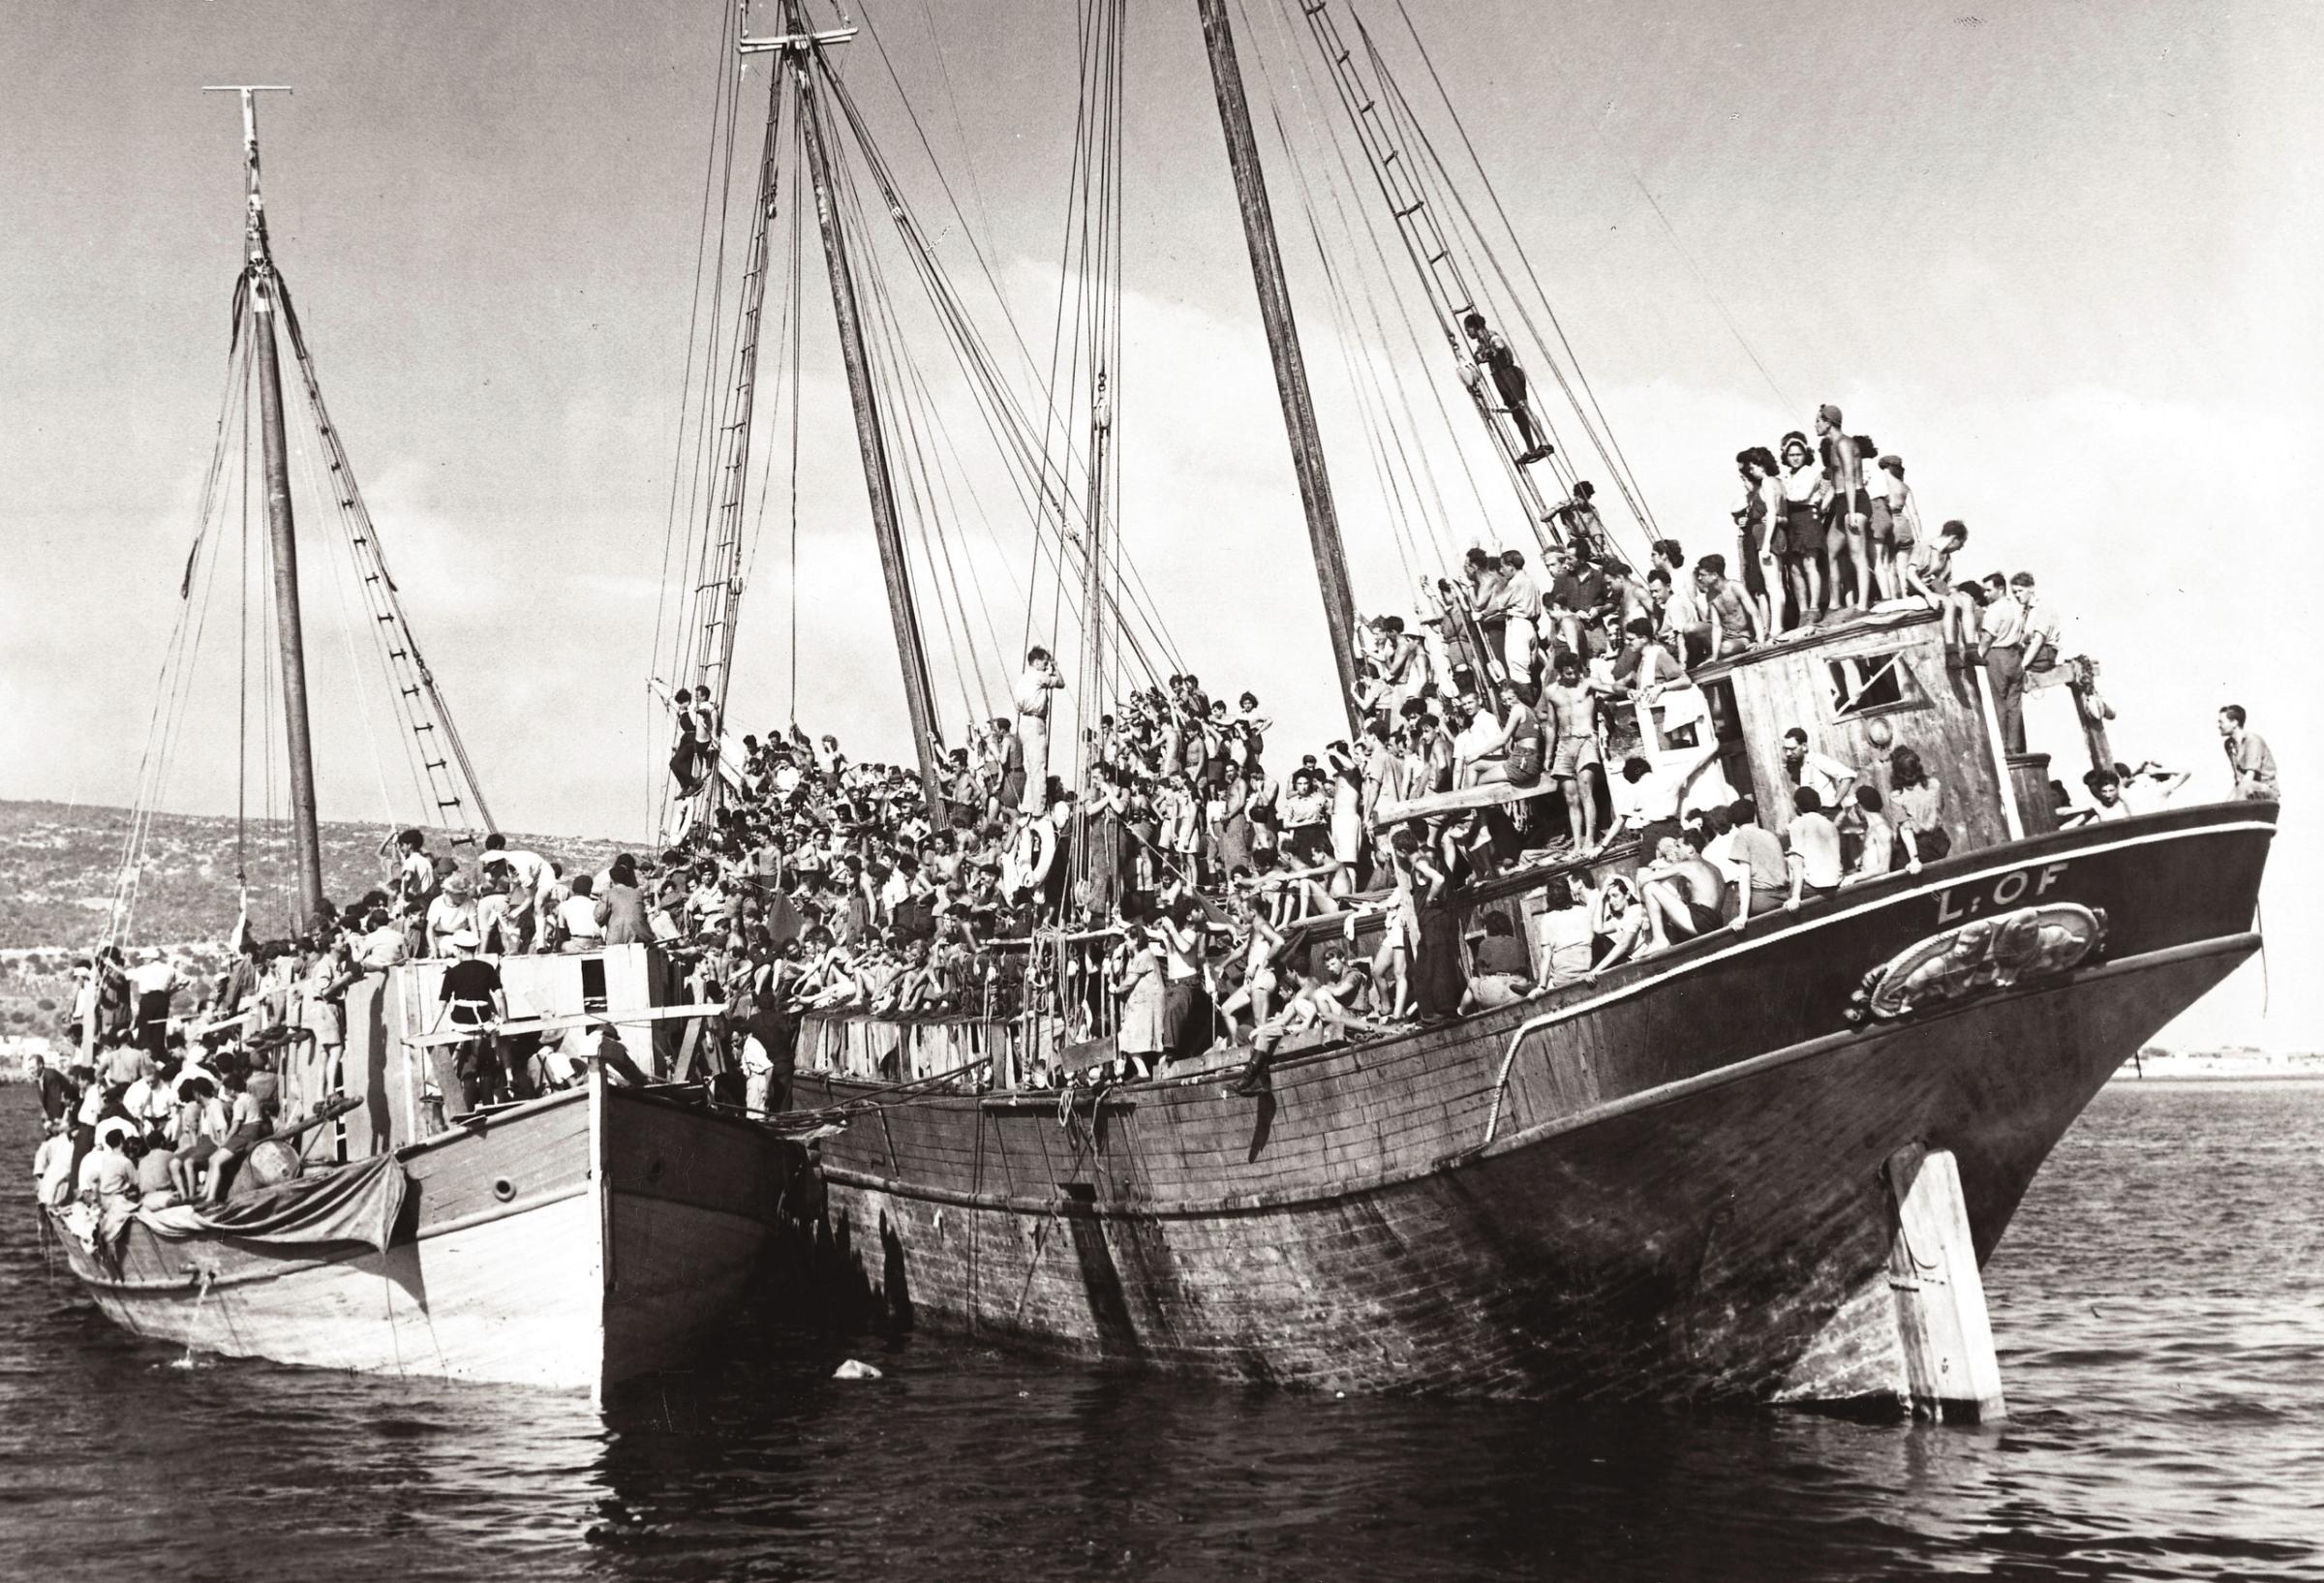 The Holy Land Jewish refugees and survivors of Holocaust. Haifa, Palestine, July 1946.